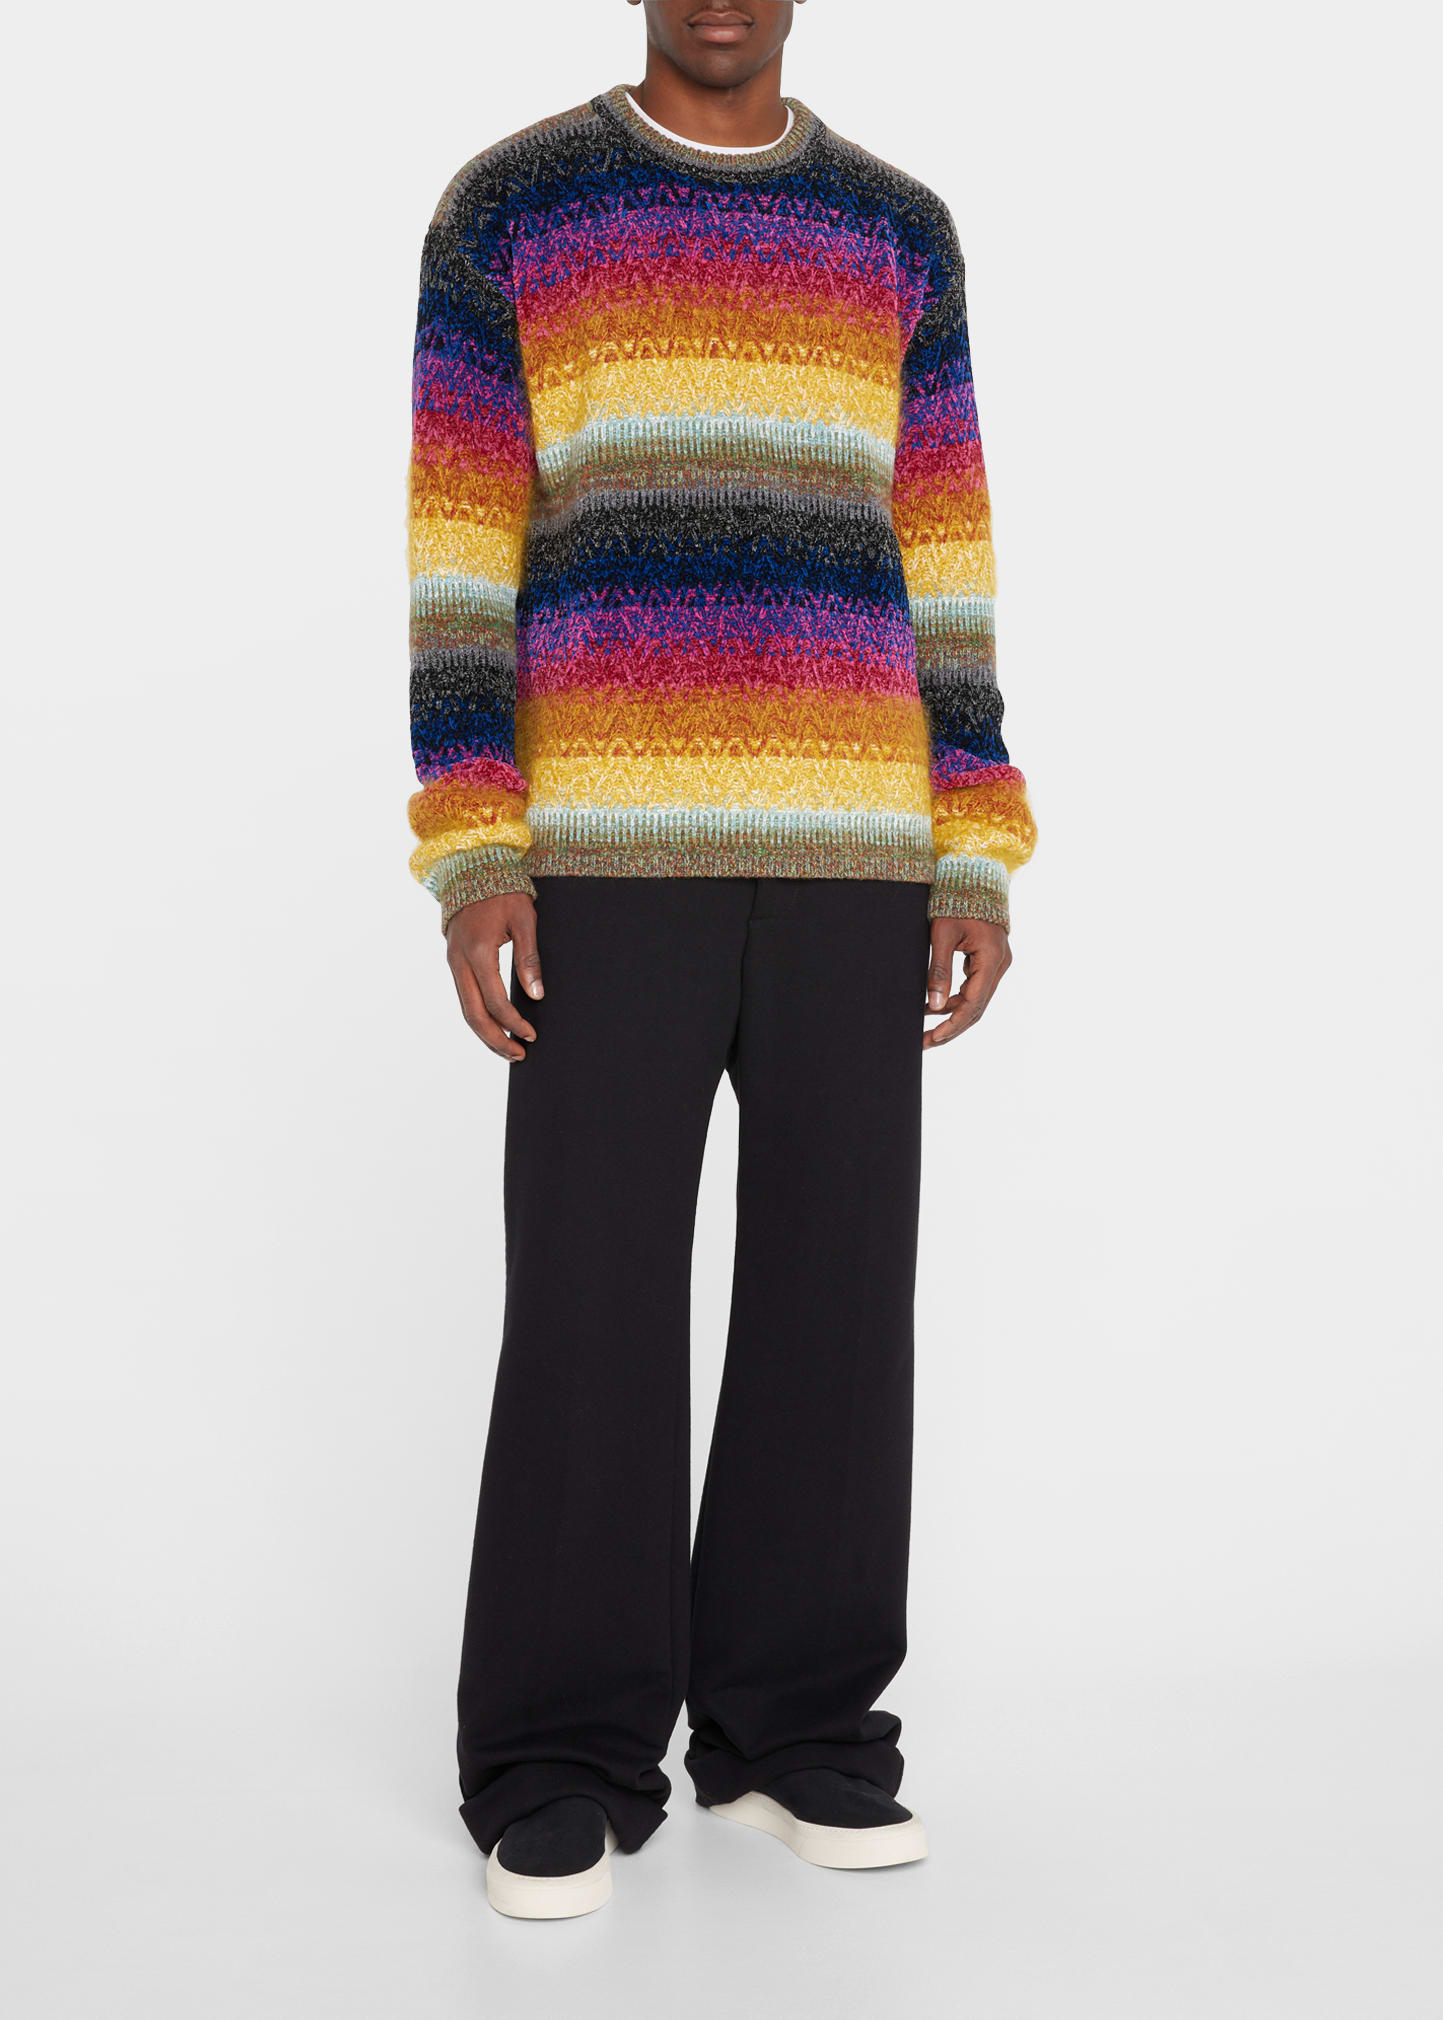 Marni Men's Multi-Stripe Knit Sweater